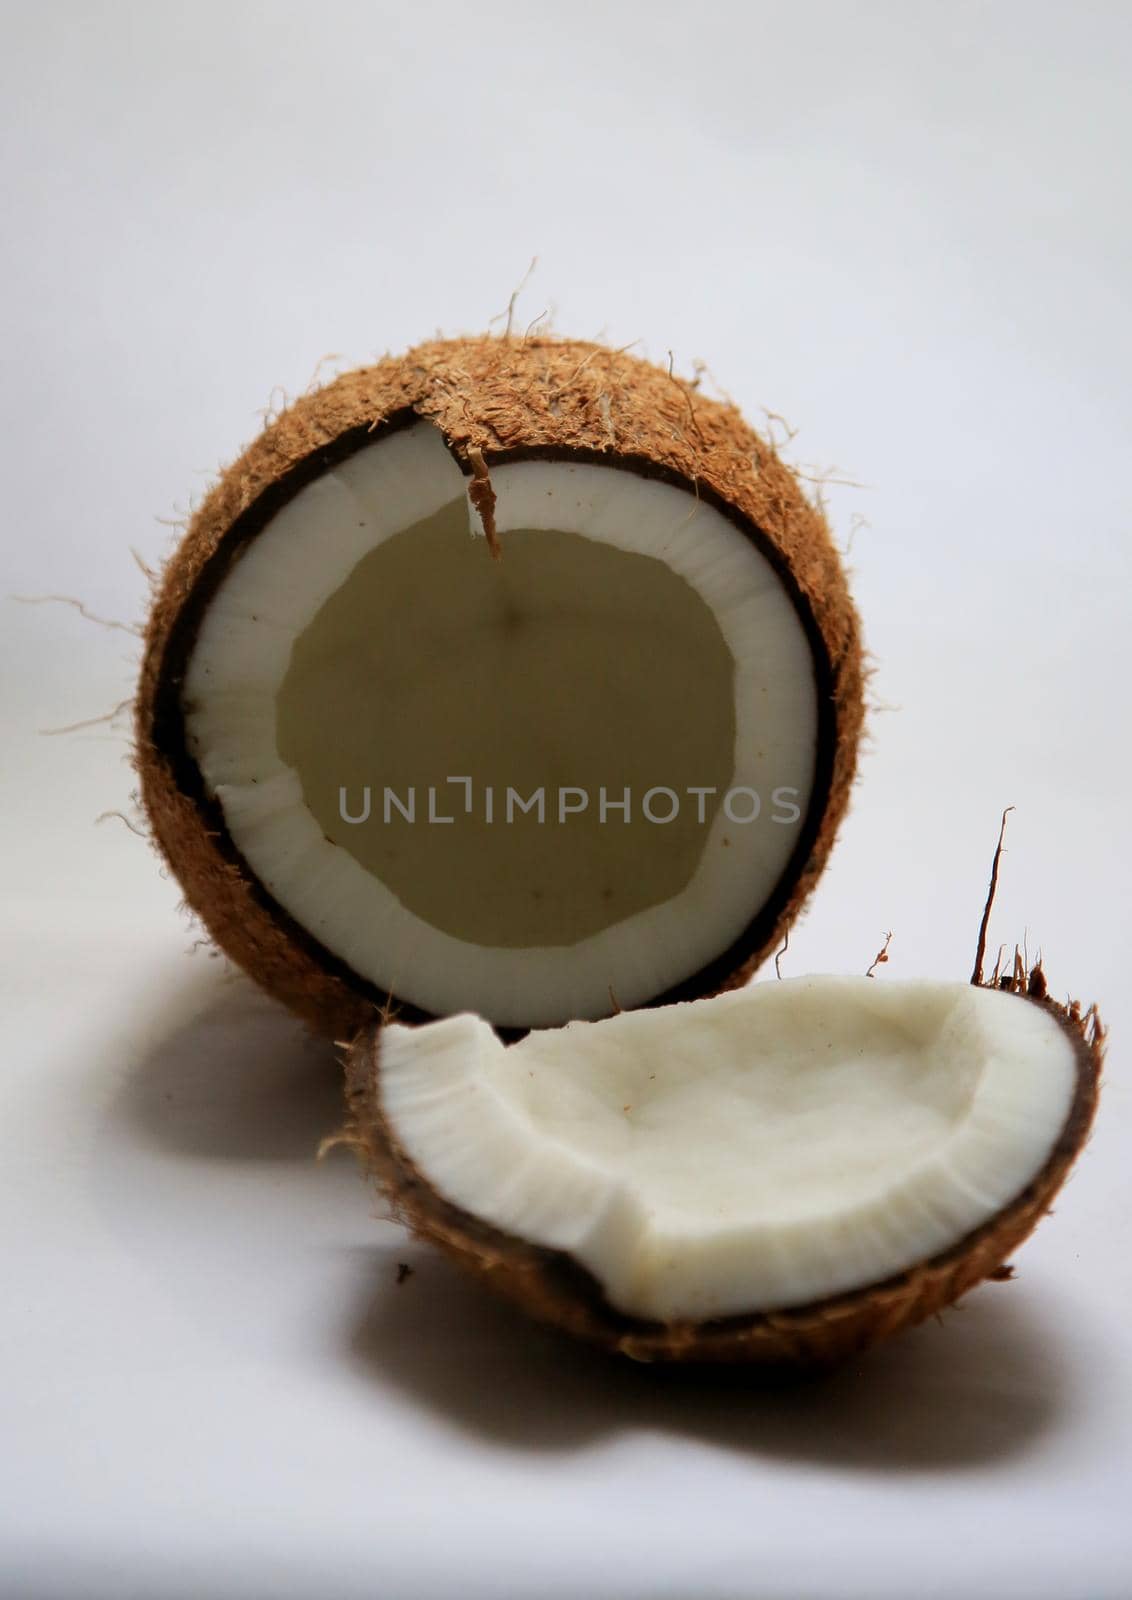 salvador, bahia / brazil - may 19, 2020: broken dry coconut.